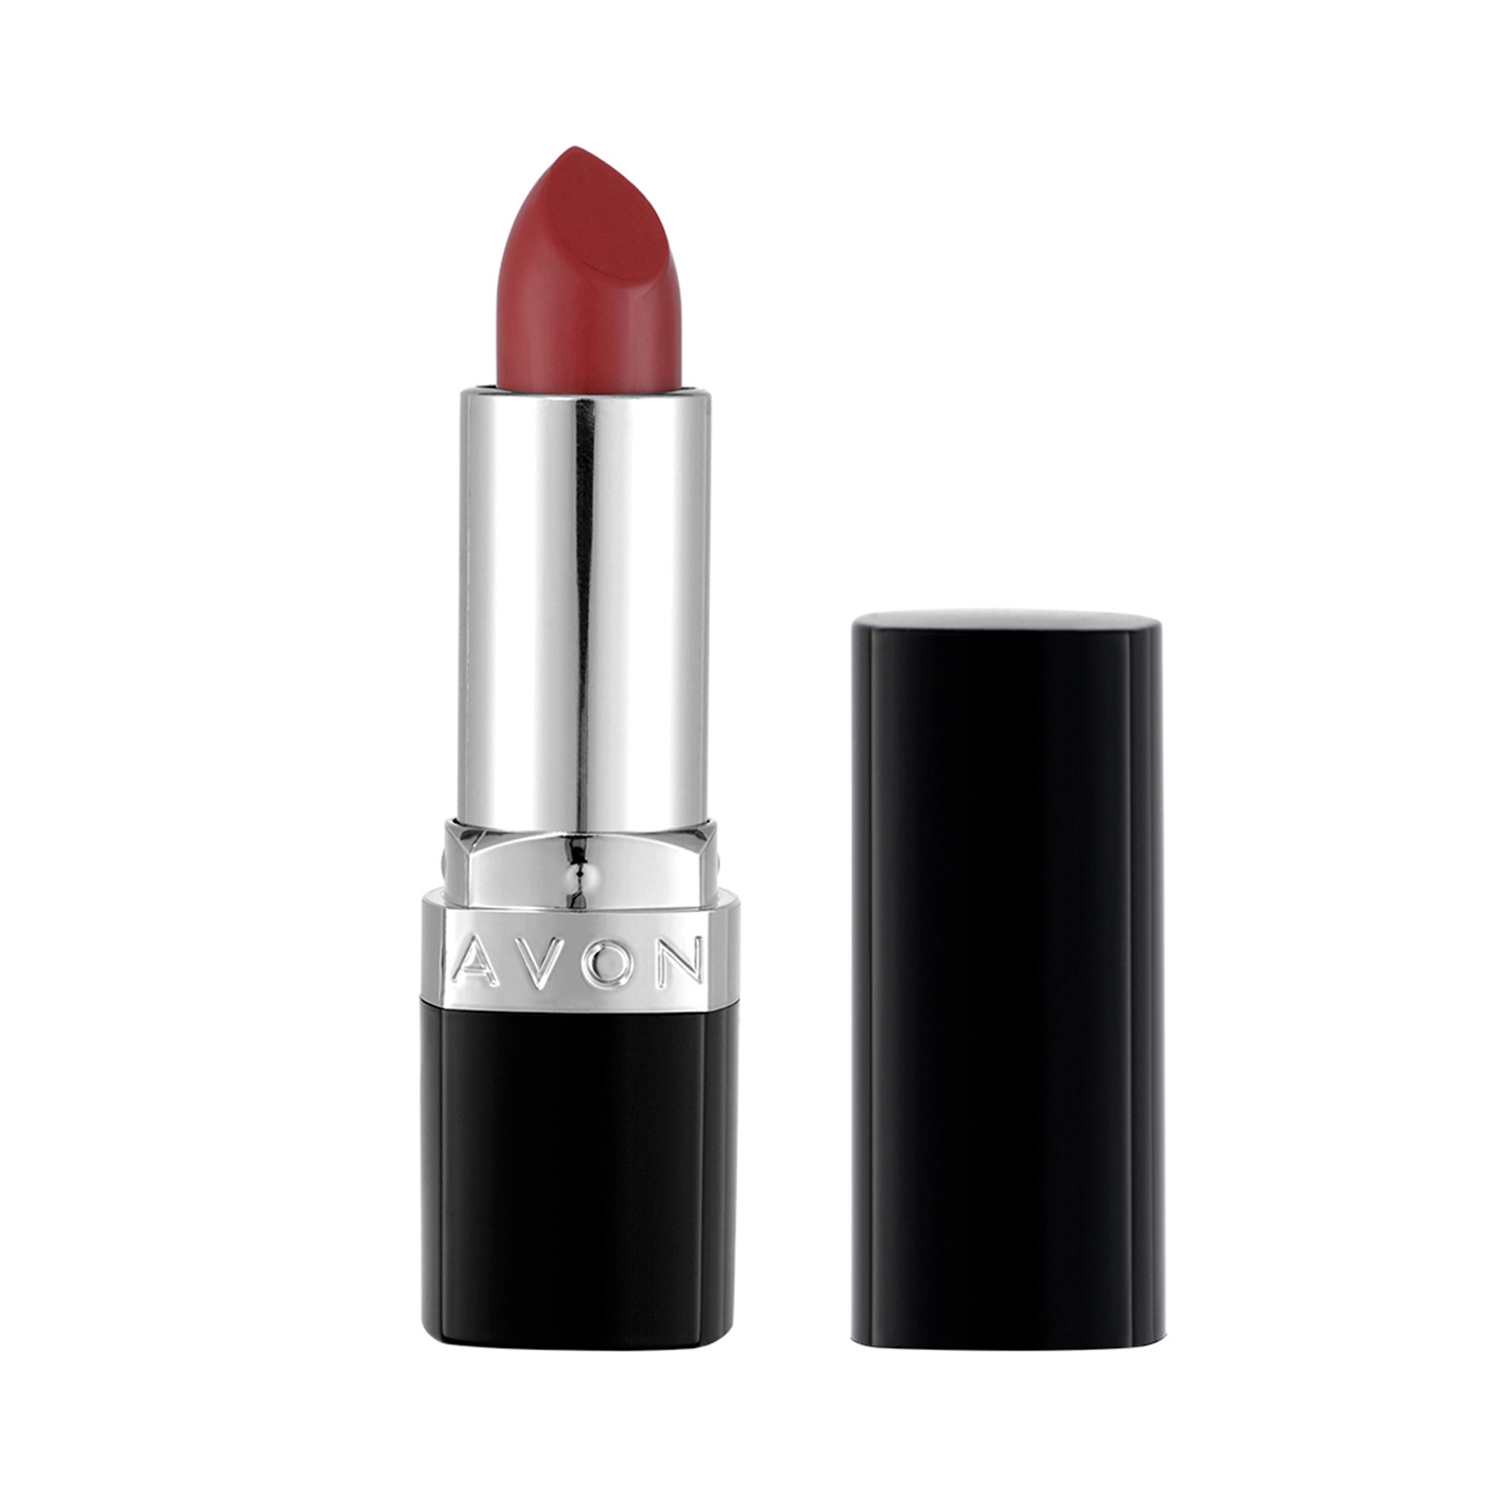 Avon | Avon True Color Lipstick SPF 15 - Wineberry (3.8g)